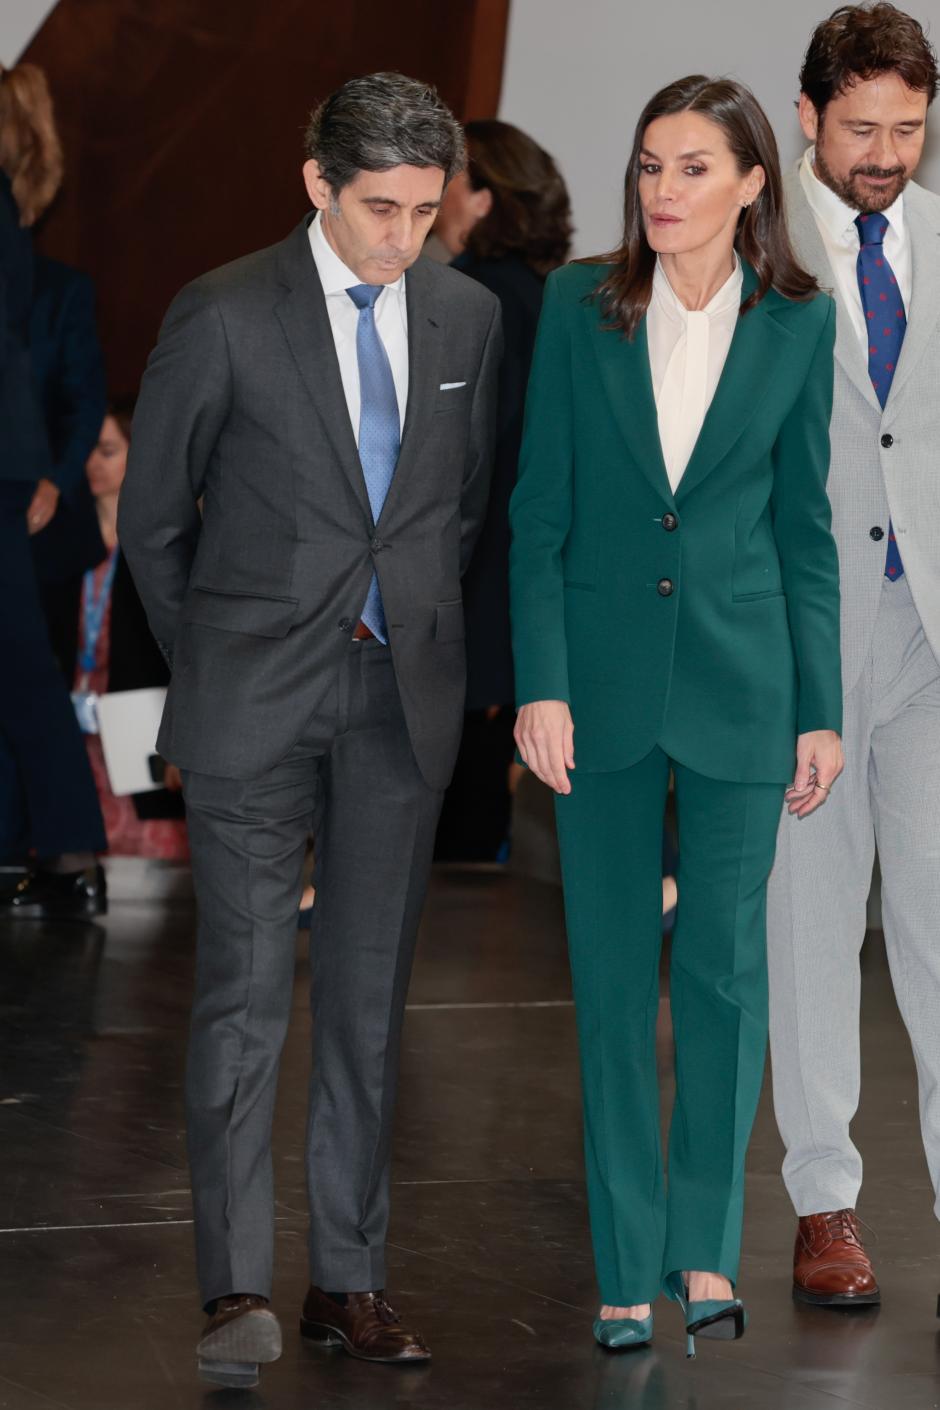 Spanish Queen Letizia and José María Álvarez-Pallete with Miguel Angel Tobias during premiere documentary film "El Camino Interior" in Madrid on Thursday, 9 March 2023.